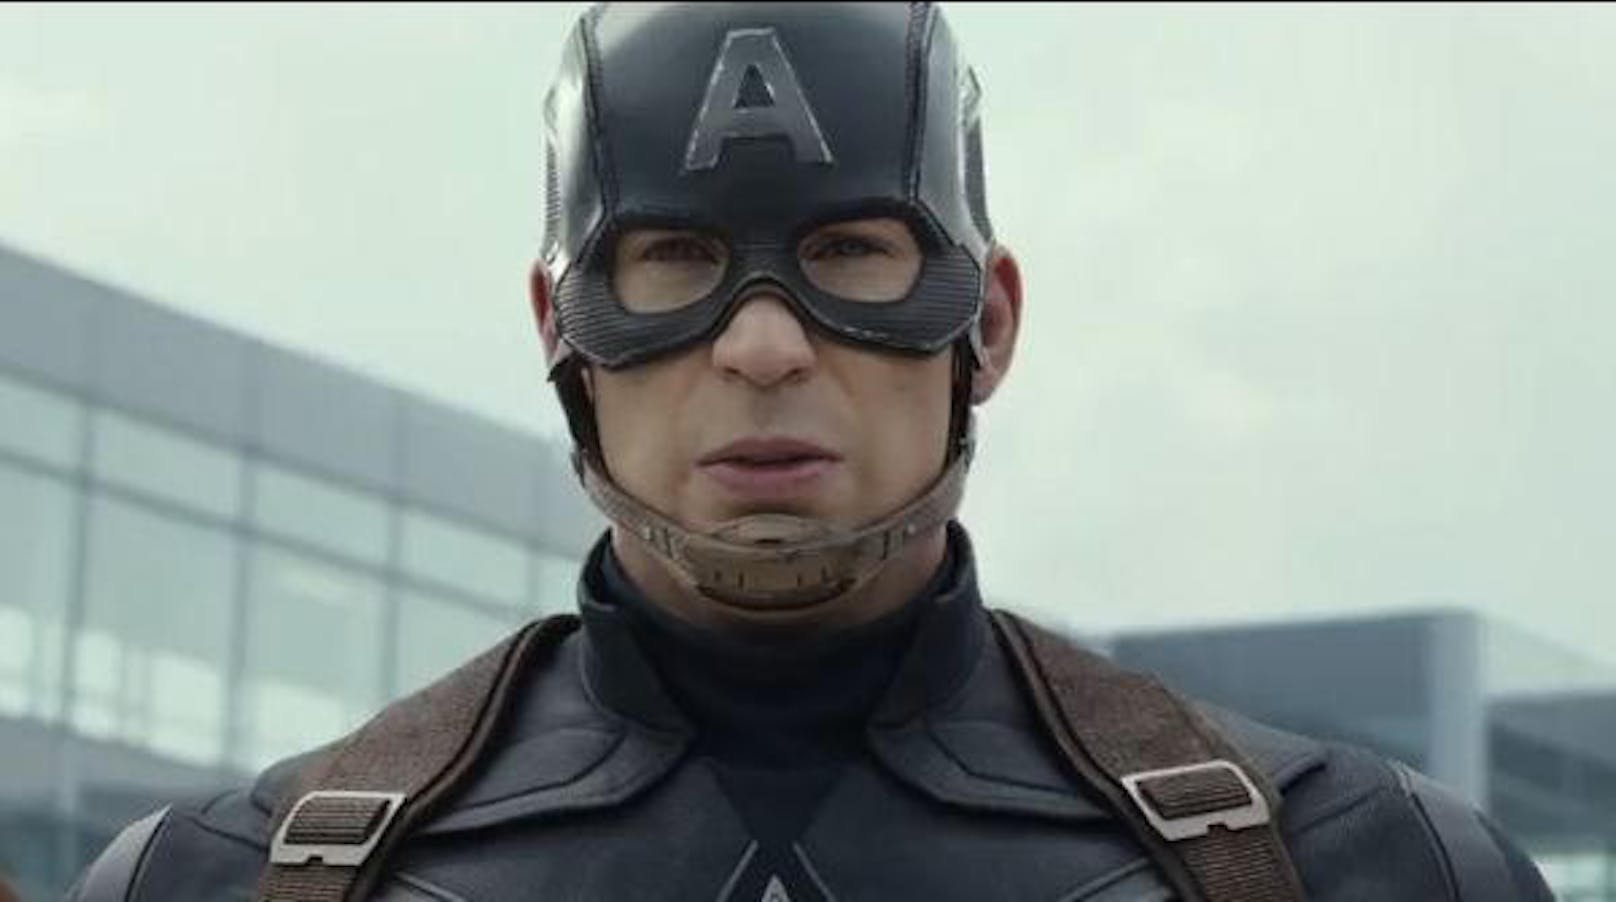 "Captain America in Civil War"